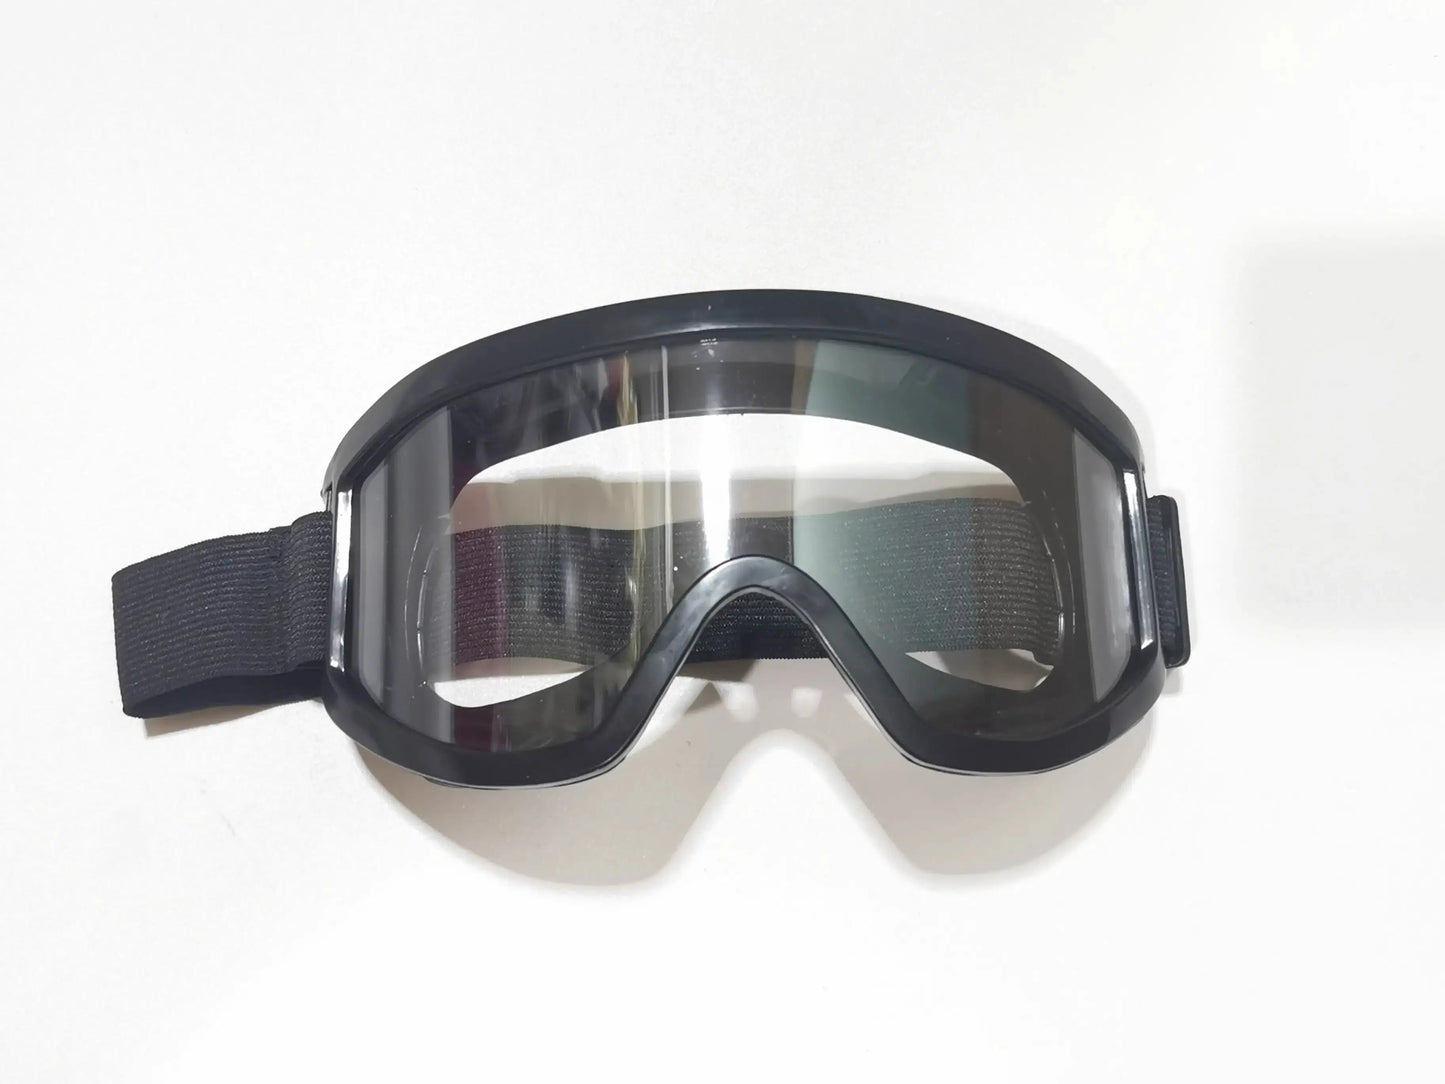 Russian Ratnik 6B50 Goggle Tactical Safety Glasses-m416gelblaster-m416gelblaster